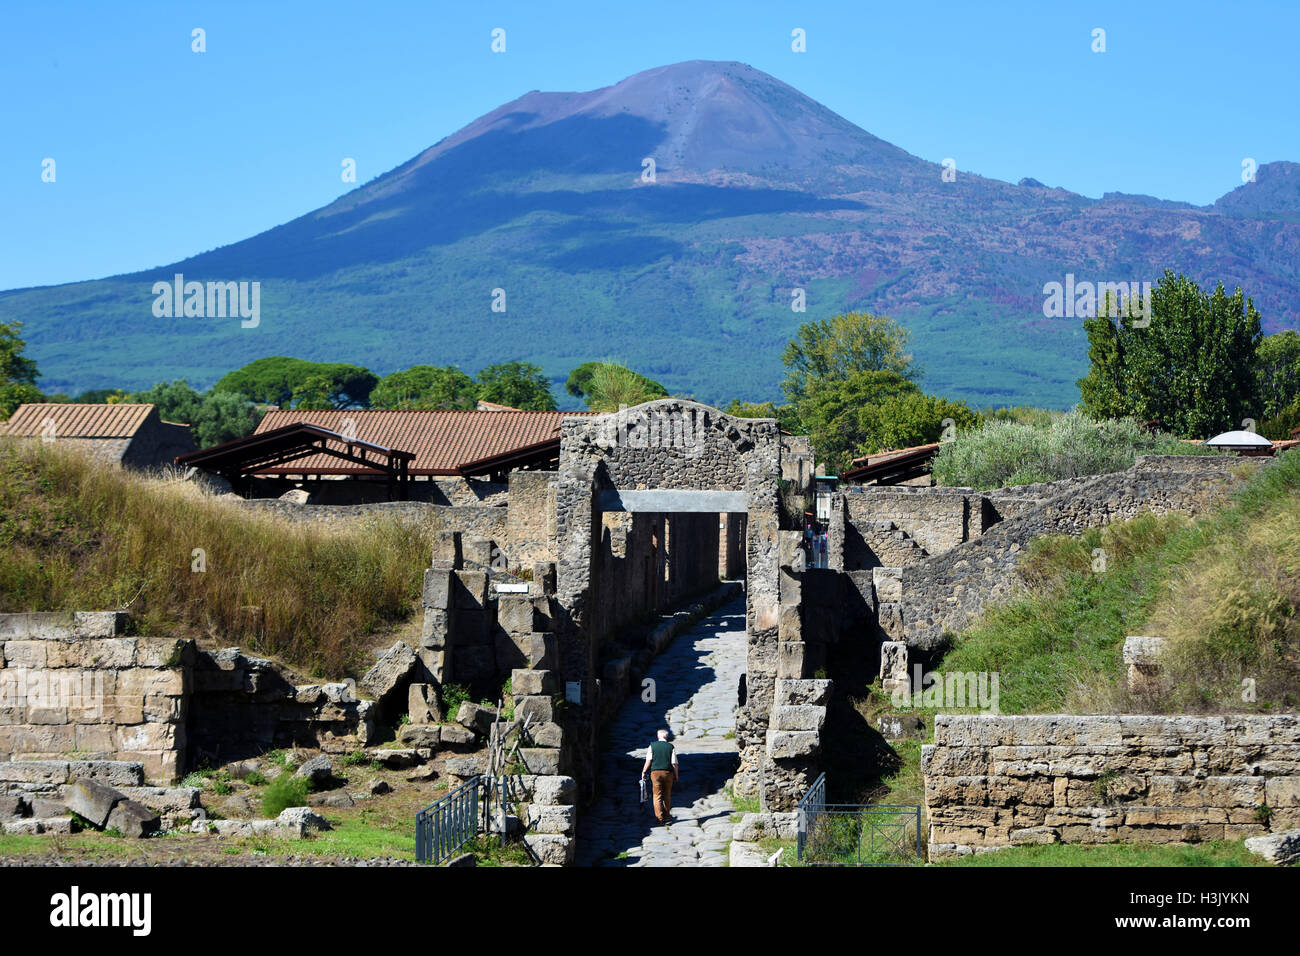 Mount Vesuvius and the Roman ruins, bodies and Frescoes of Pompeii, Italy. Stock Photo